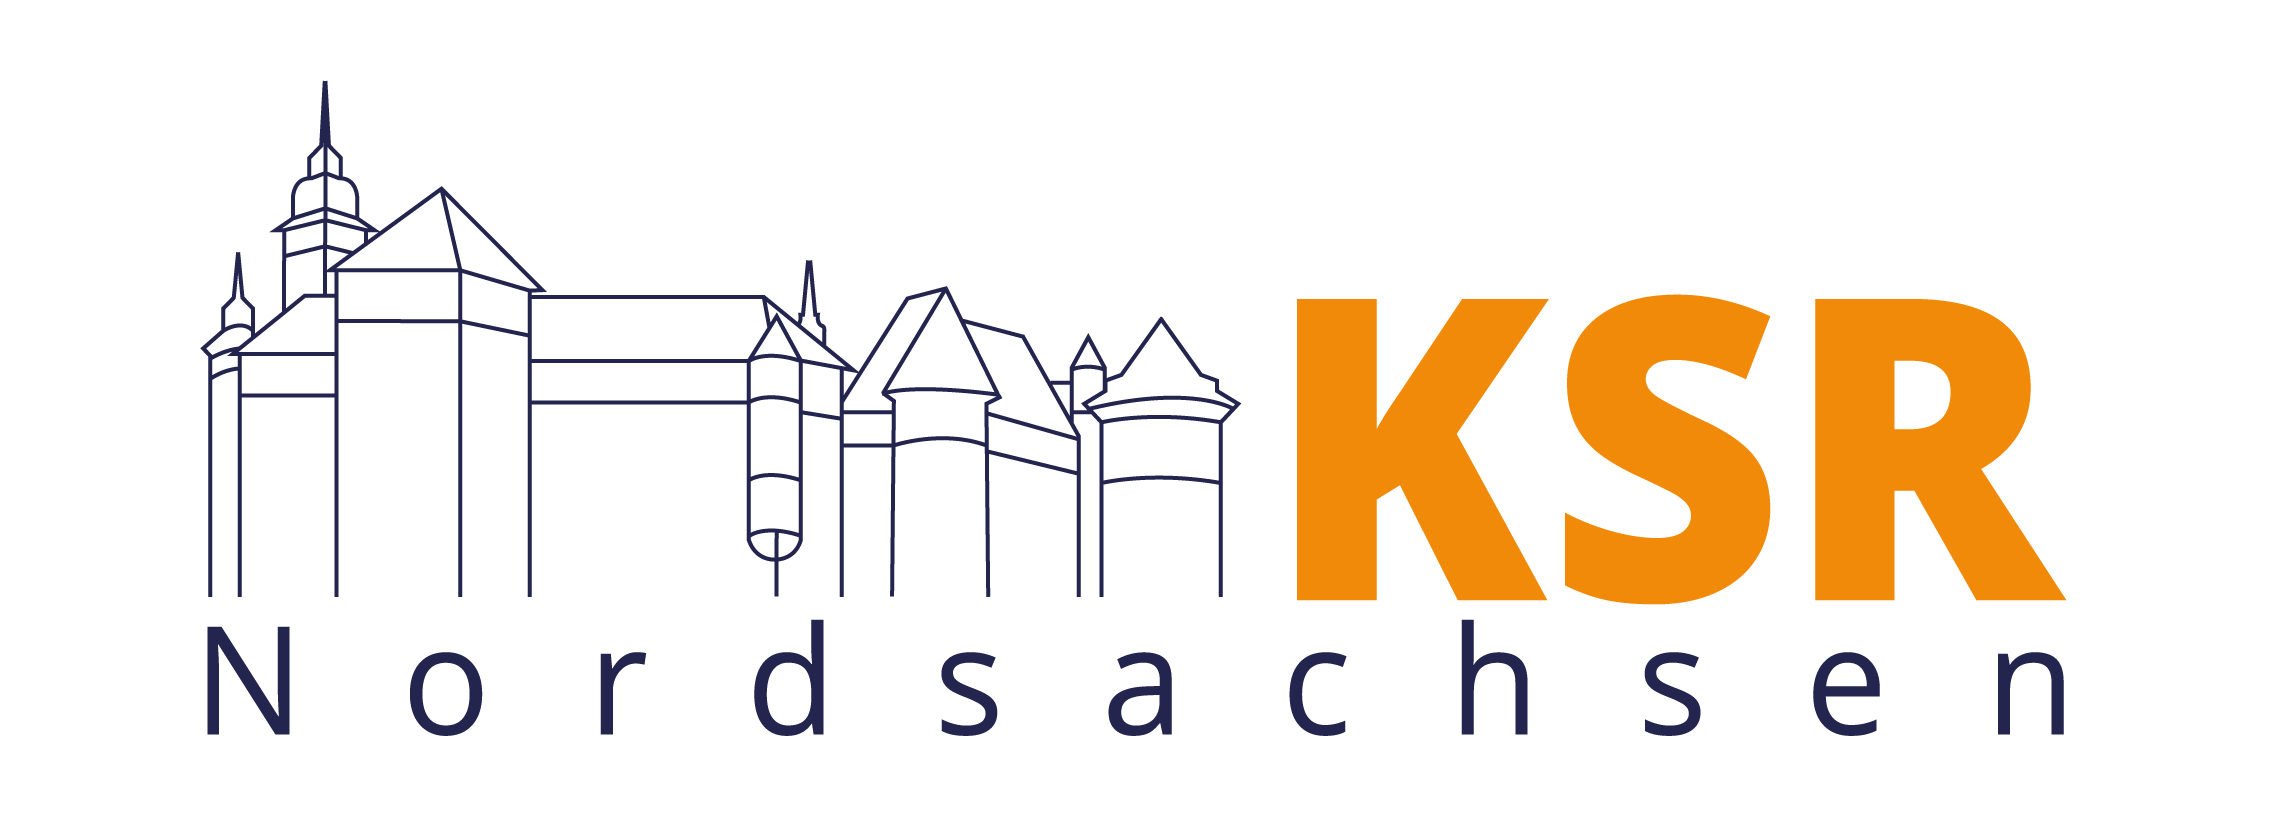 Man sieht das Logo des KSR Nordsachsen, welches aus dem Schloss Hartenfels und dem Schriftzug "KSR Nordsachsen"